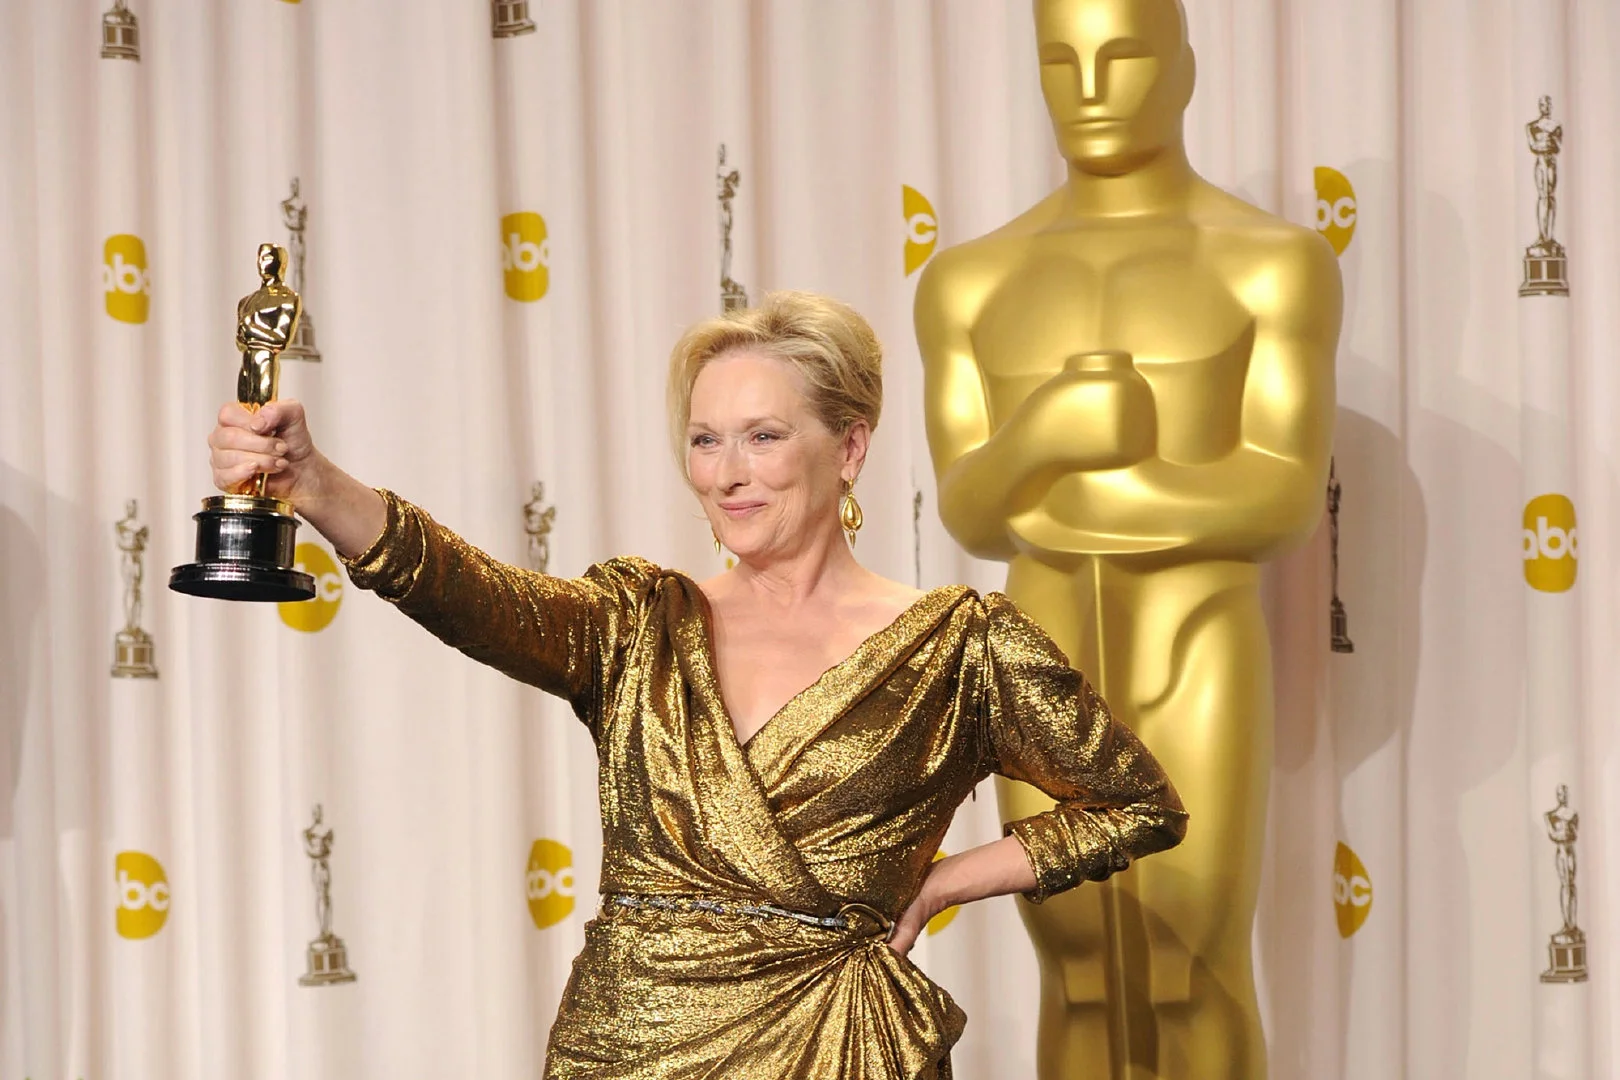 Research shows Oscar winners live longer